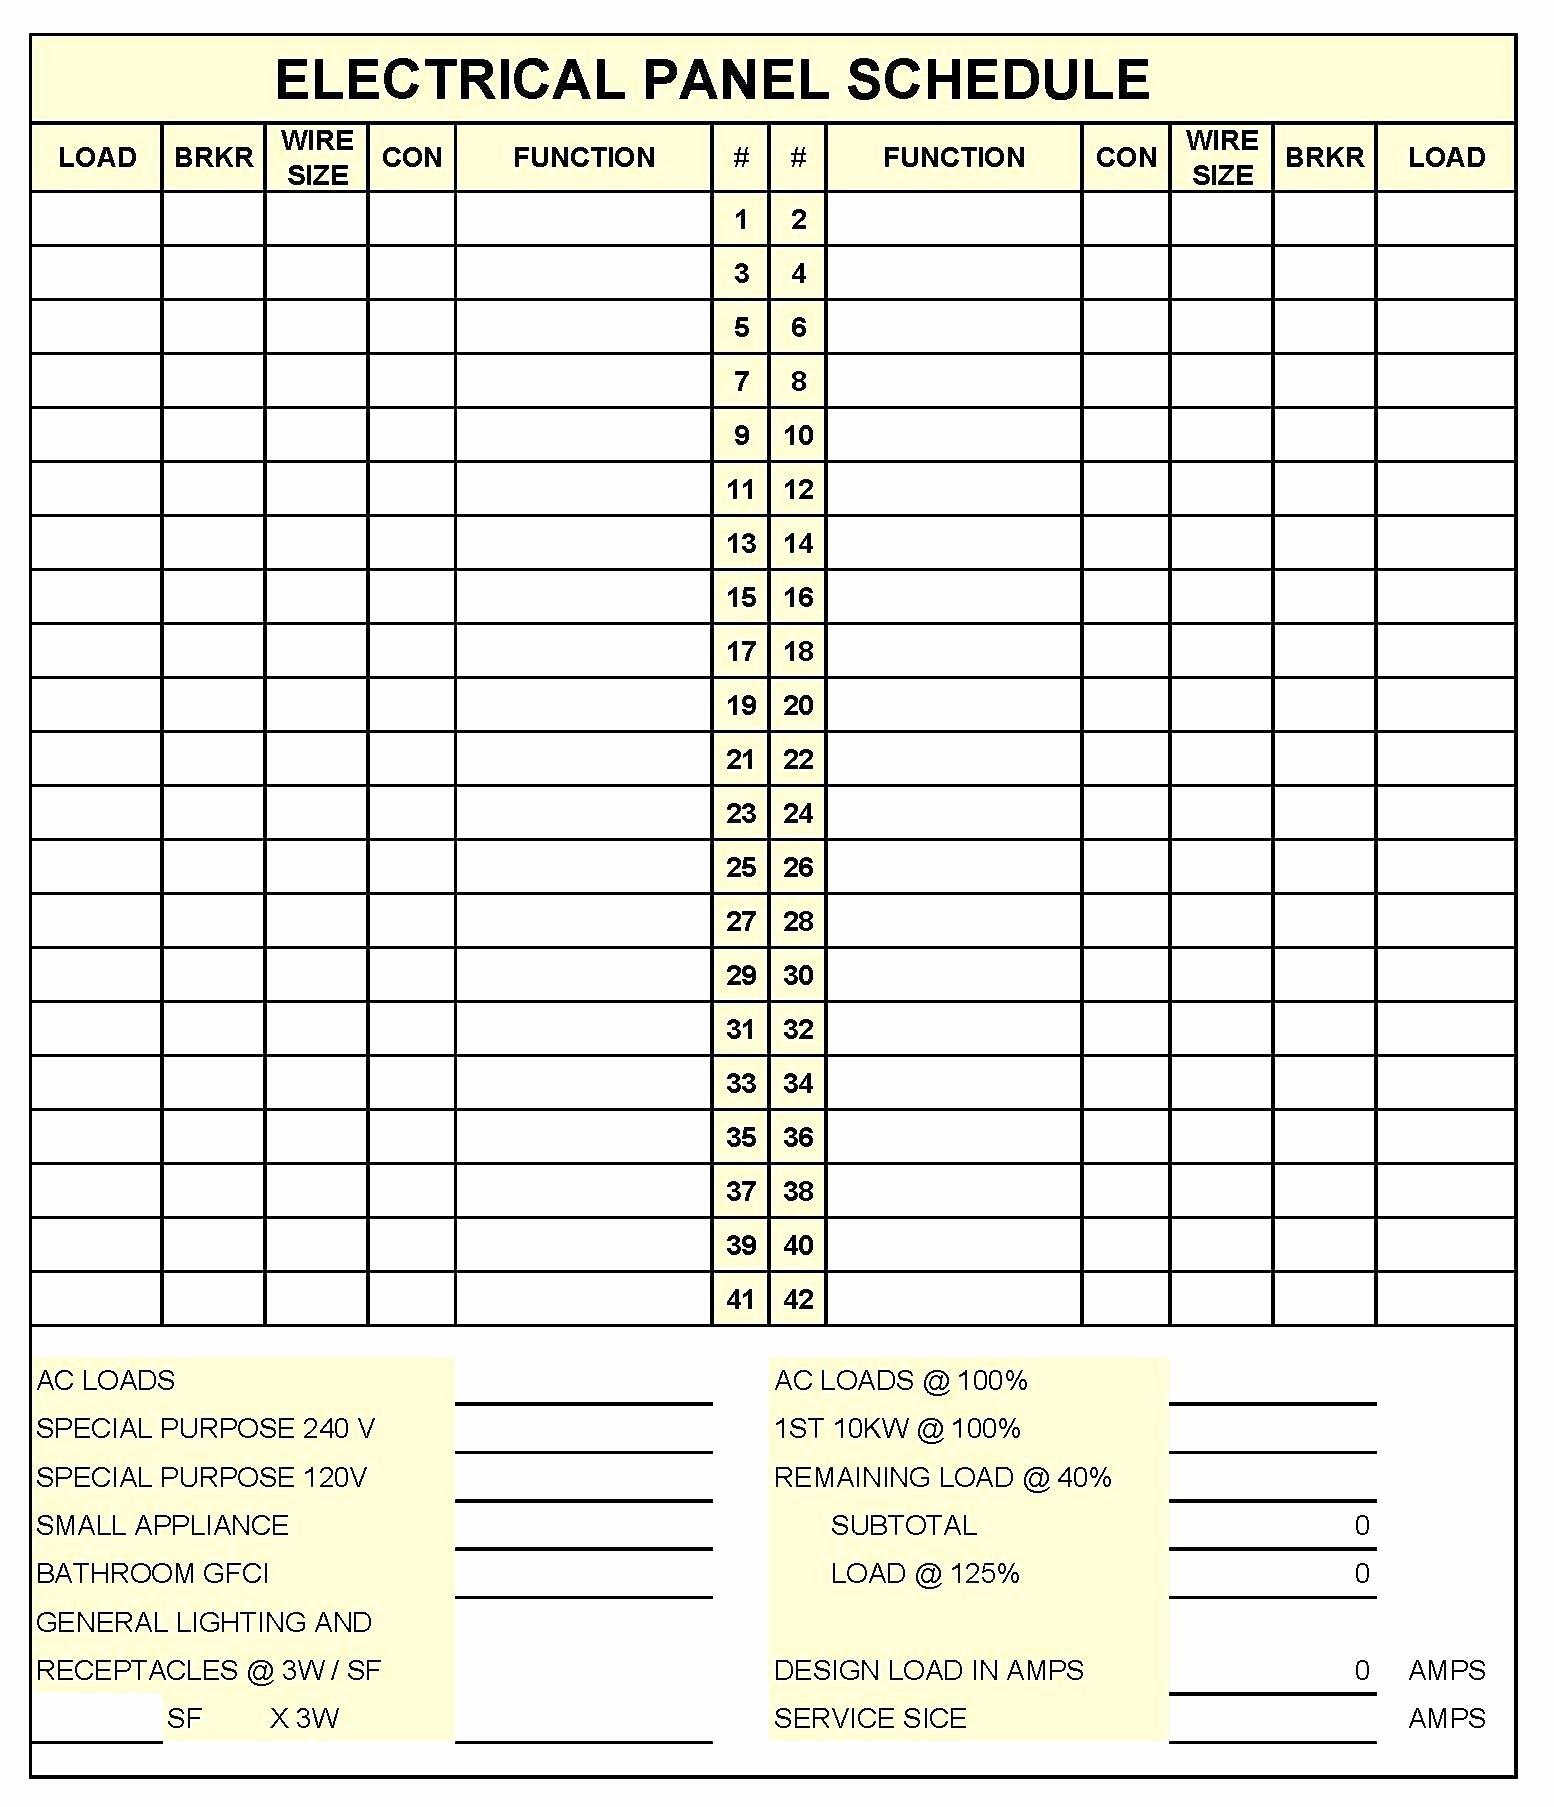 Electric Panel Schedule Template Unique Electrical Panel Schedule Template Excel